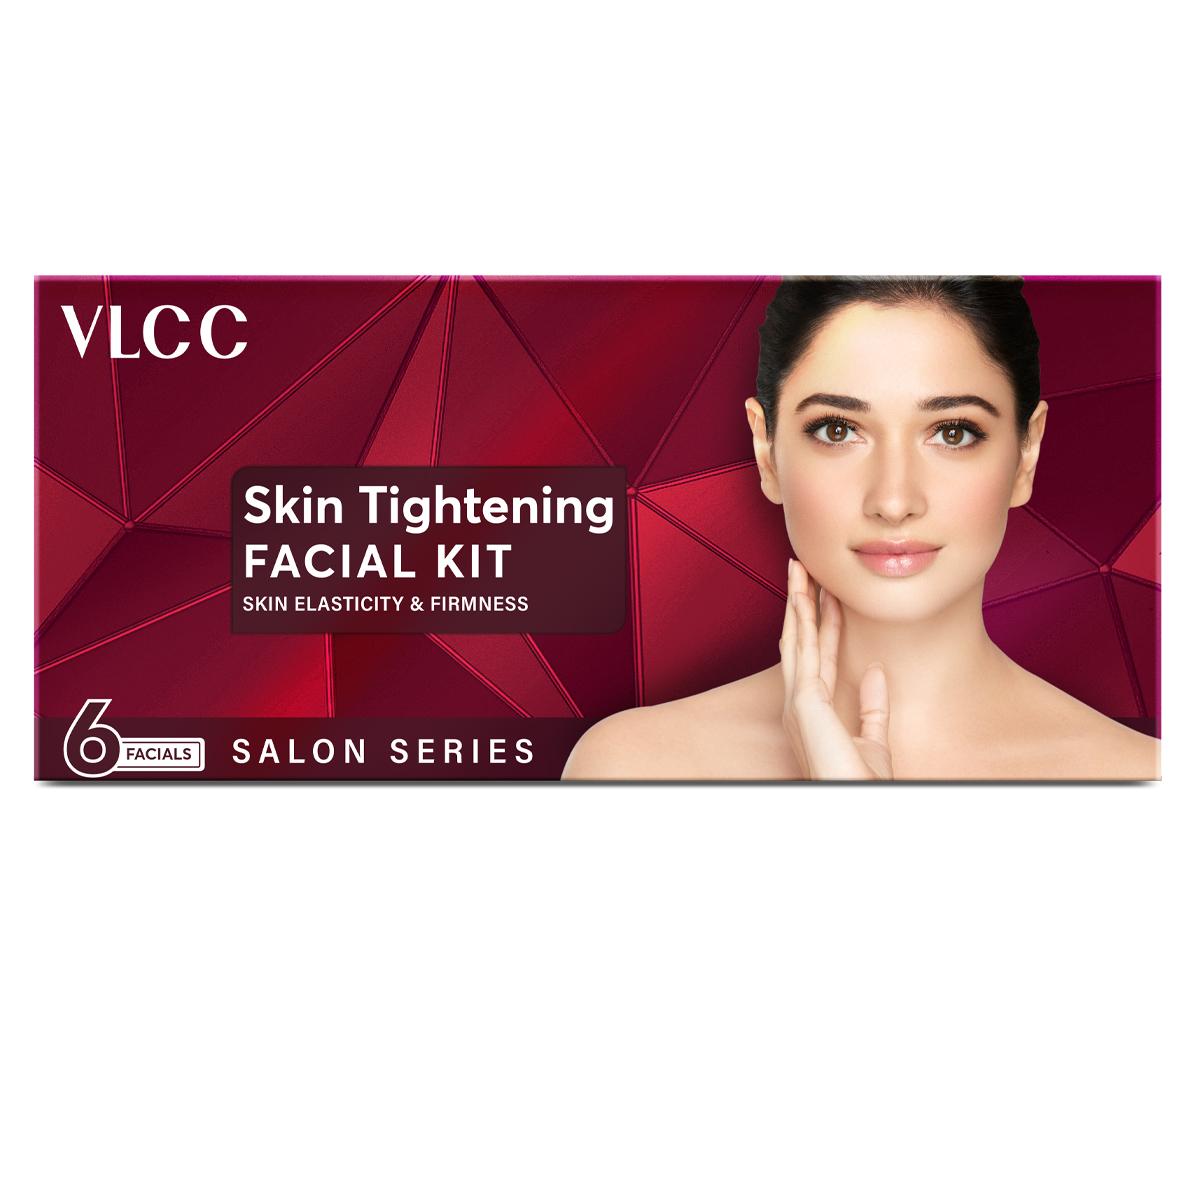 VLCC Skin Tightening Facial Kit - Restore Youthful Firmness